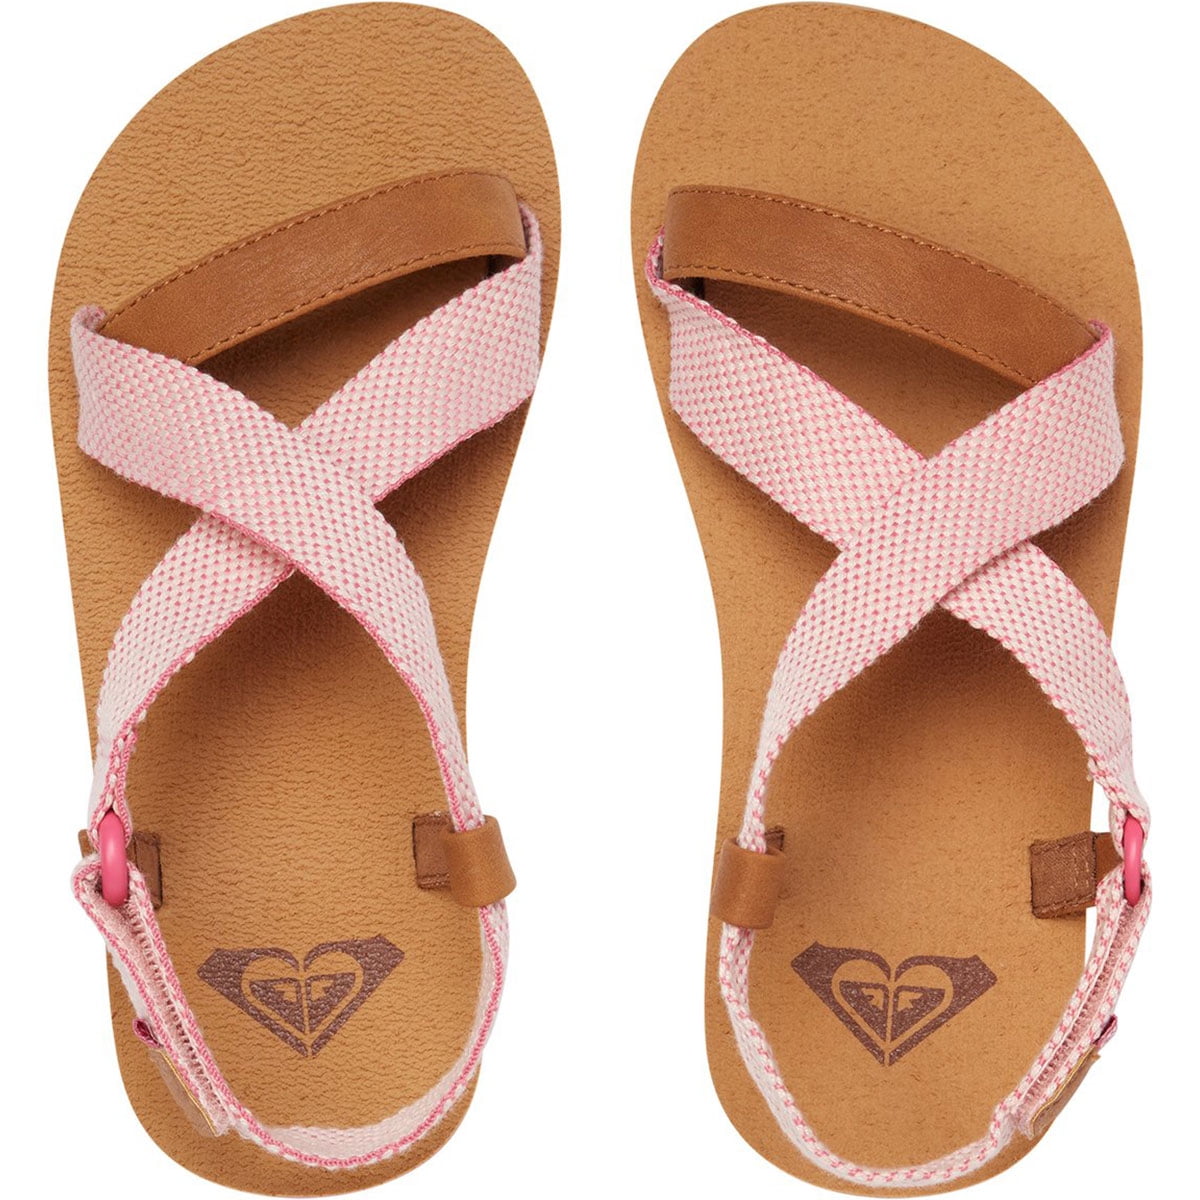 roxy girls sandals